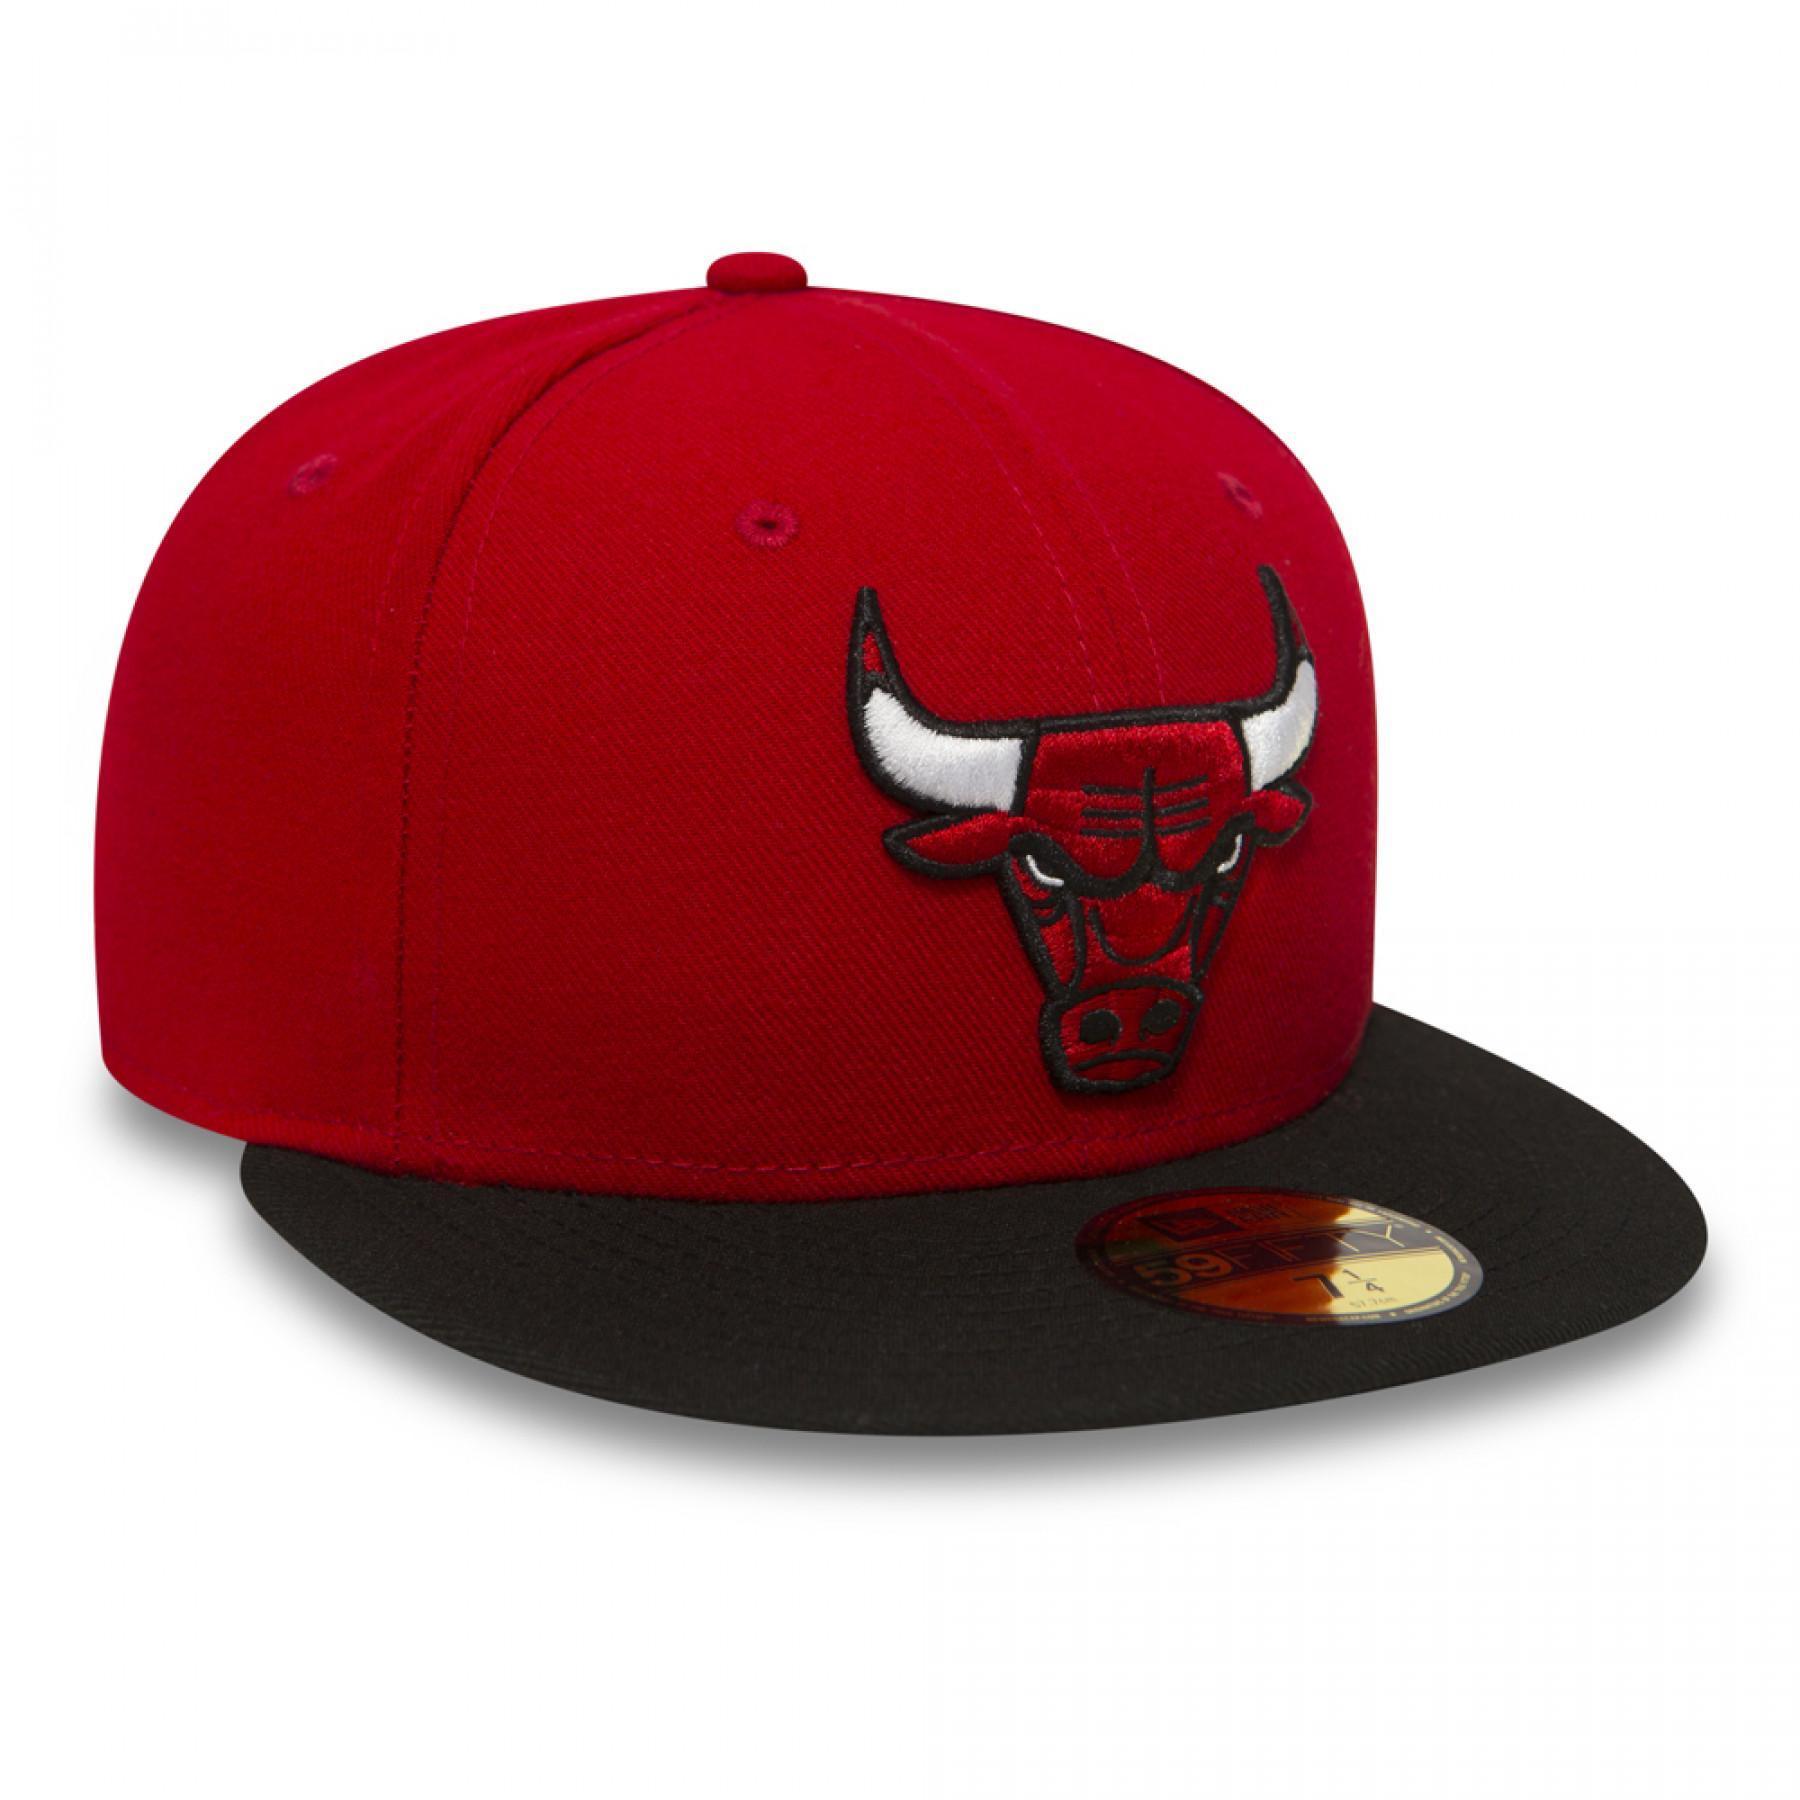 Gorra New Era essential 59fifty Chicago Bulls